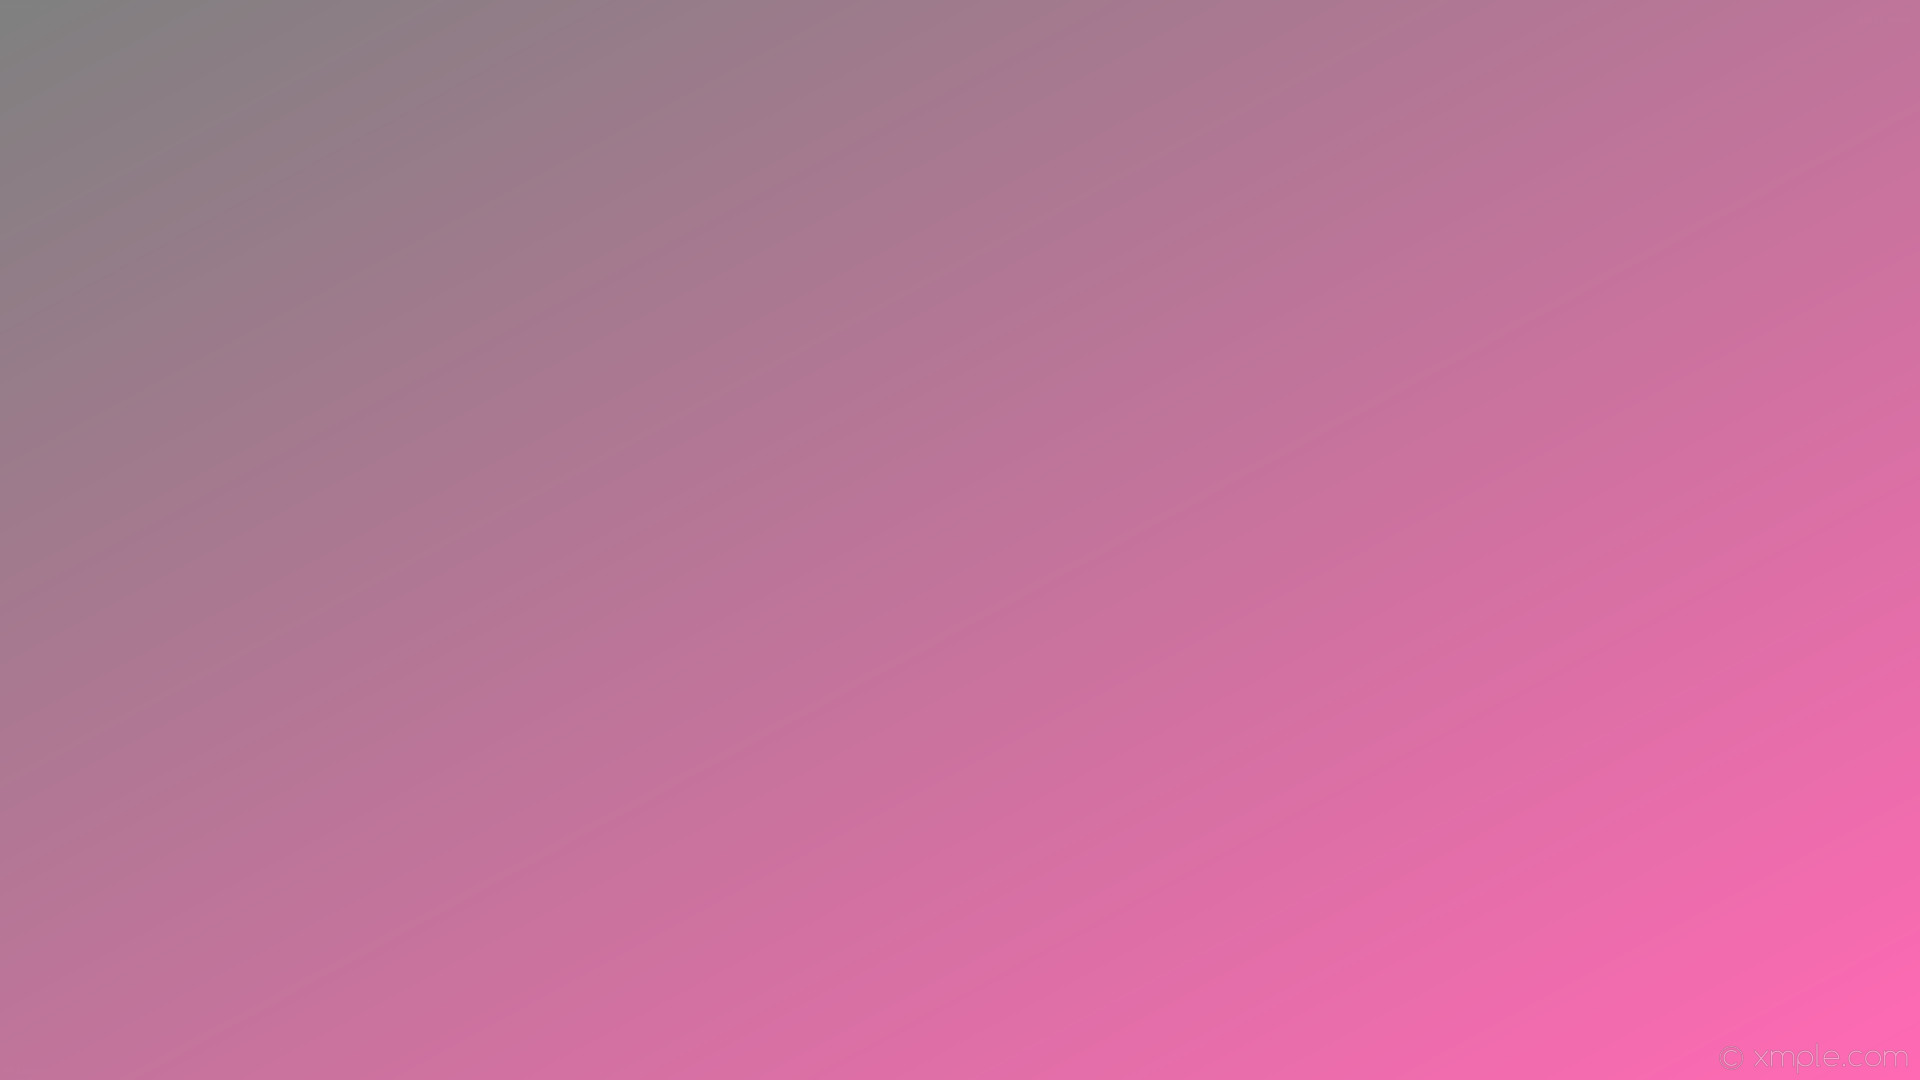 1920x1080 wallpaper grey gradient pink linear hot pink gray #ff69b4 #808080 330Â°